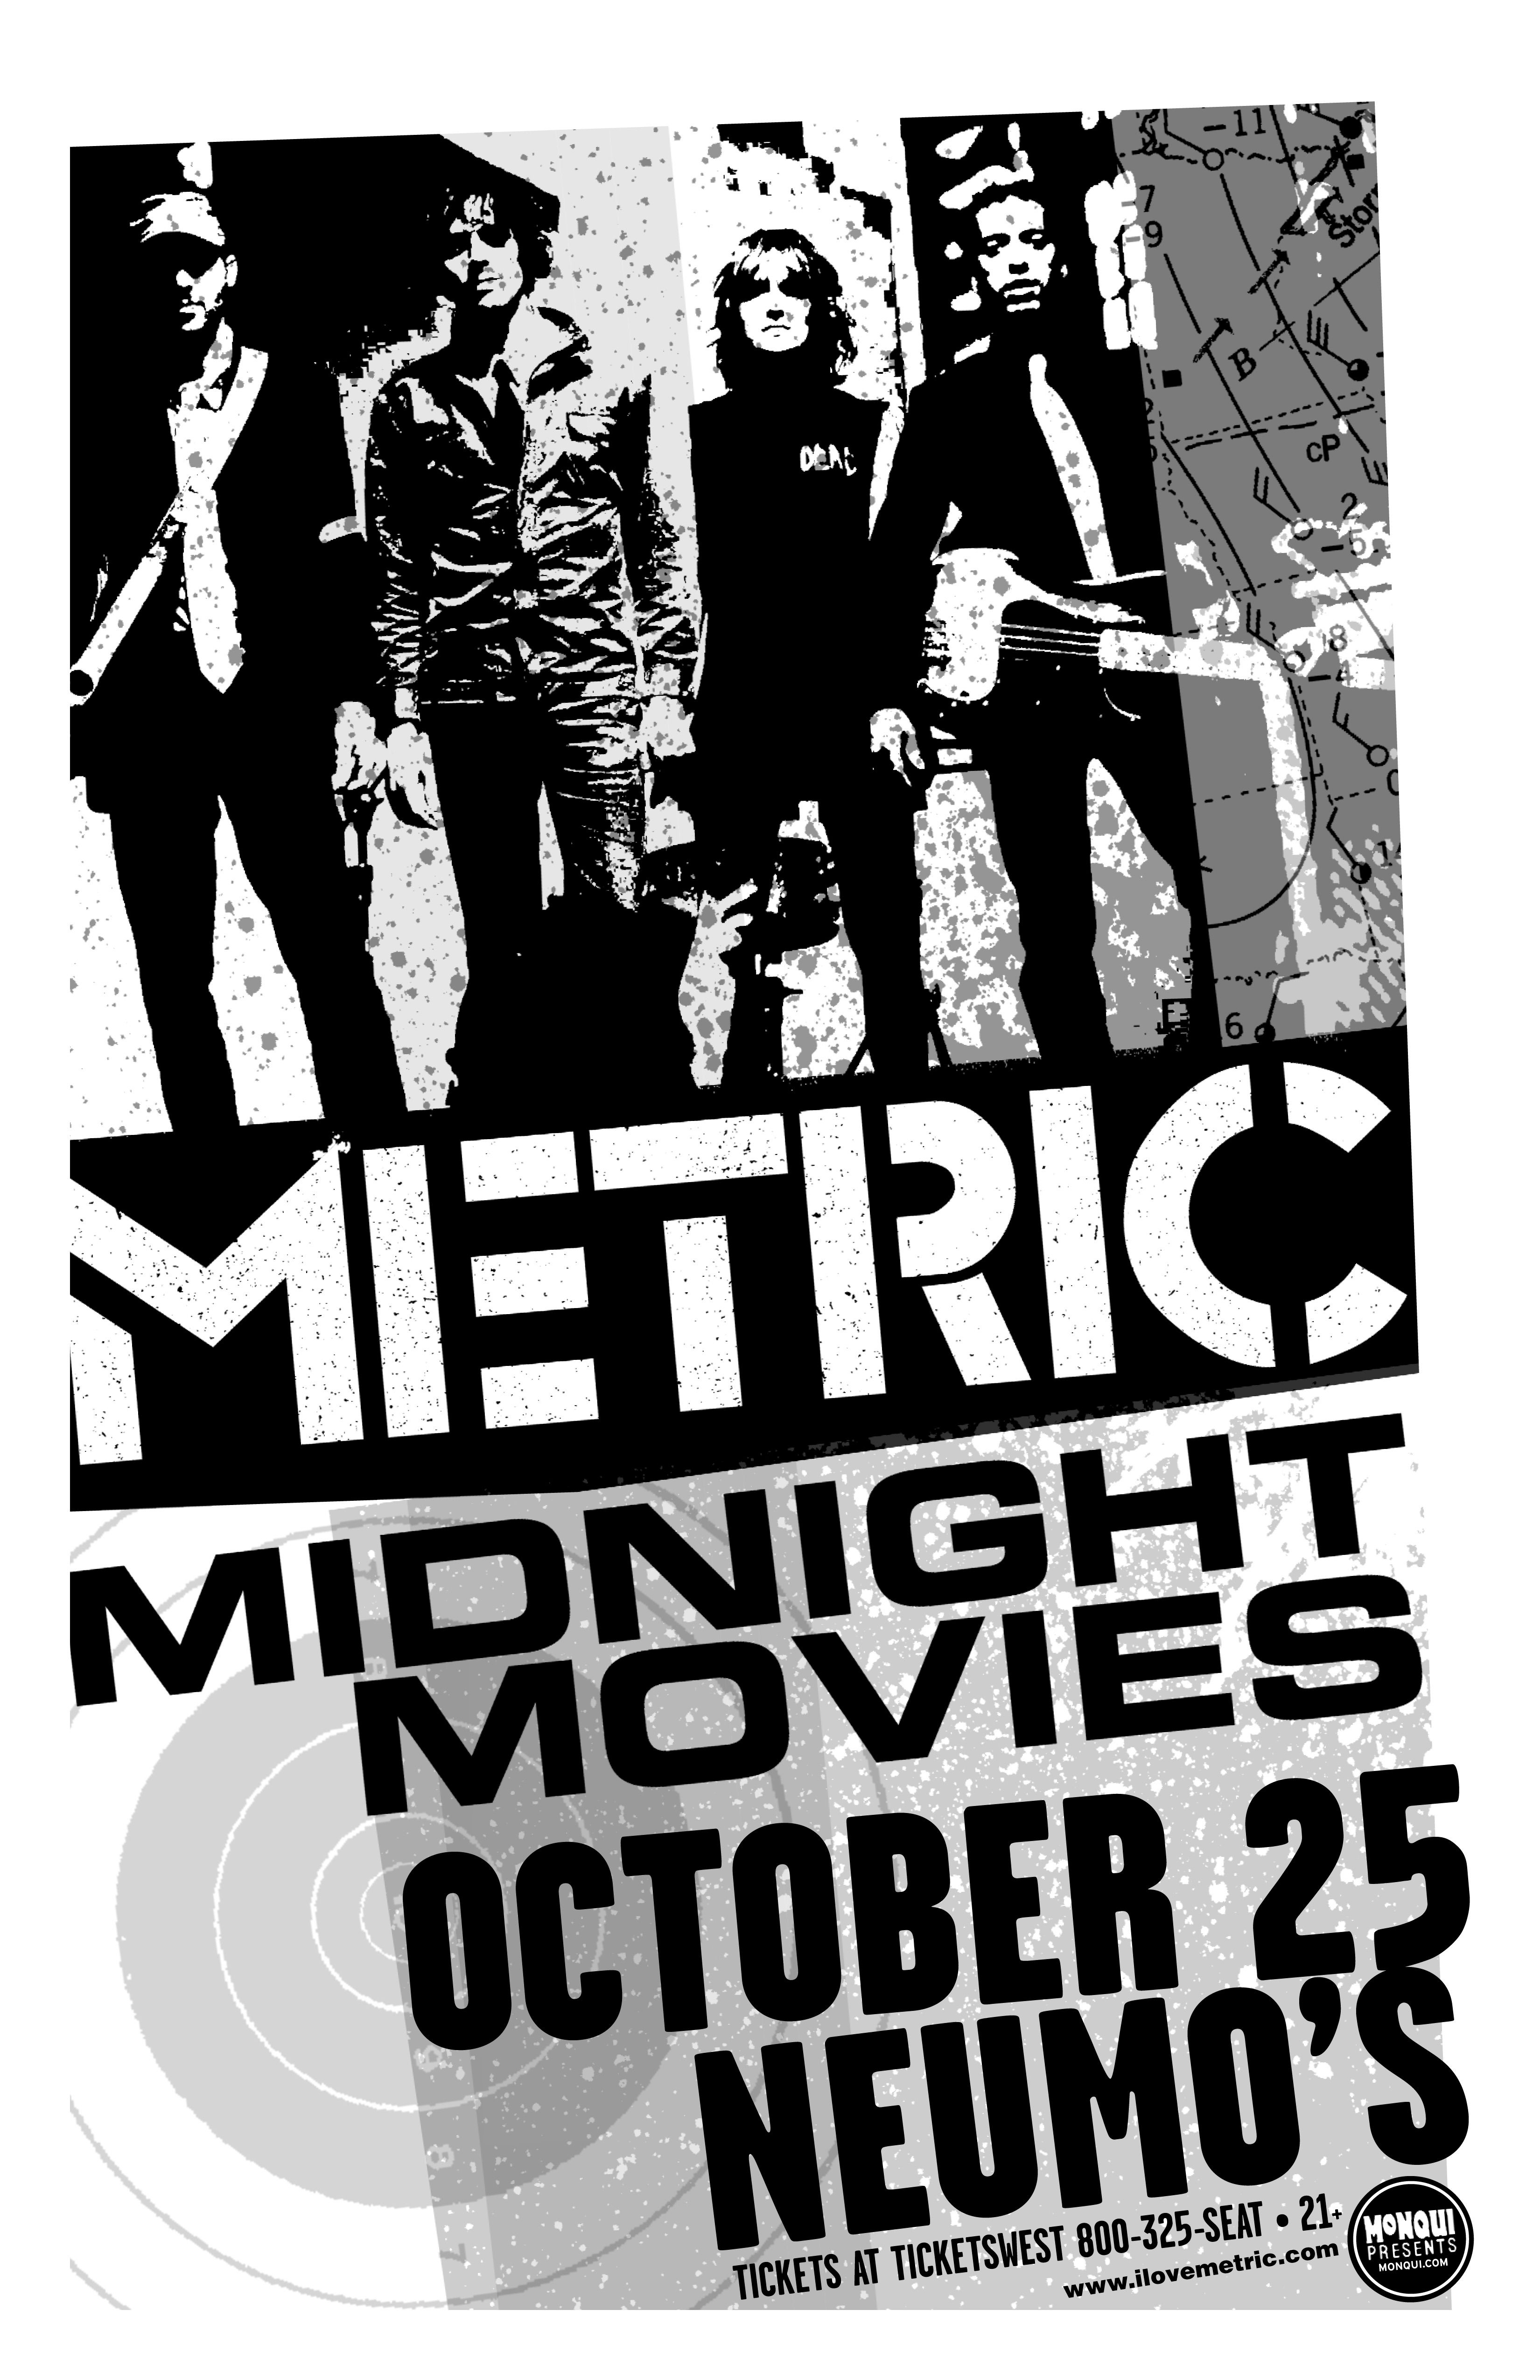 MXP-142.25 Metric 2005 Neumos  Oct 25 Concert Poster